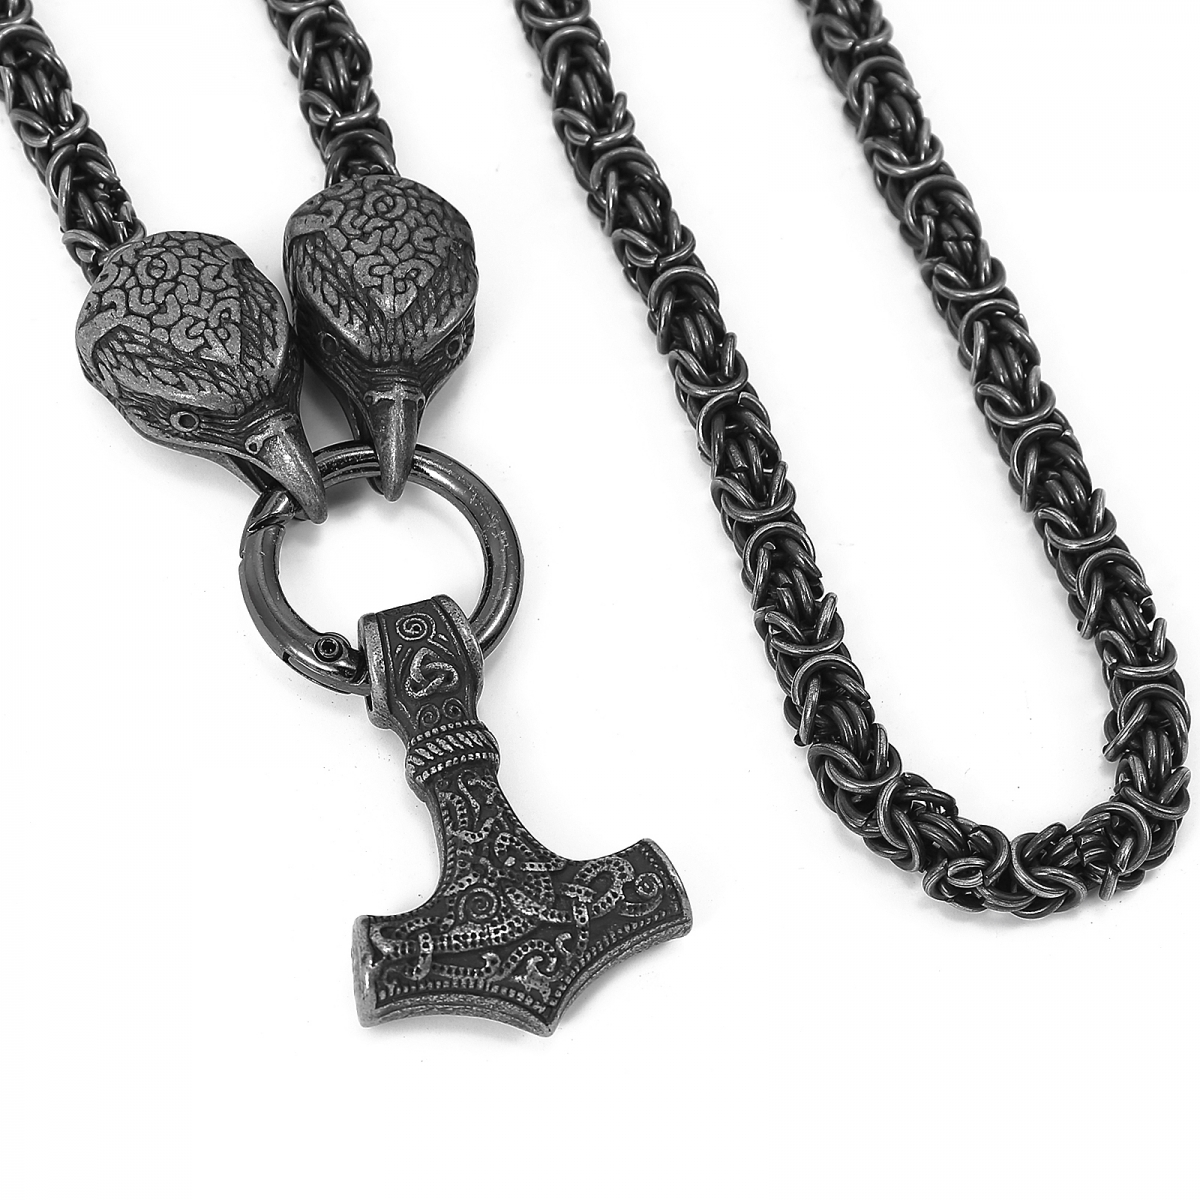 King Chain Mjolnir Necklace US$15/PC-NORSECOLLECTION- Viking Jewelry,Viking Necklace,Viking Bracelet,Viking Rings,Viking Mugs,Viking Accessories,Viking Crafts